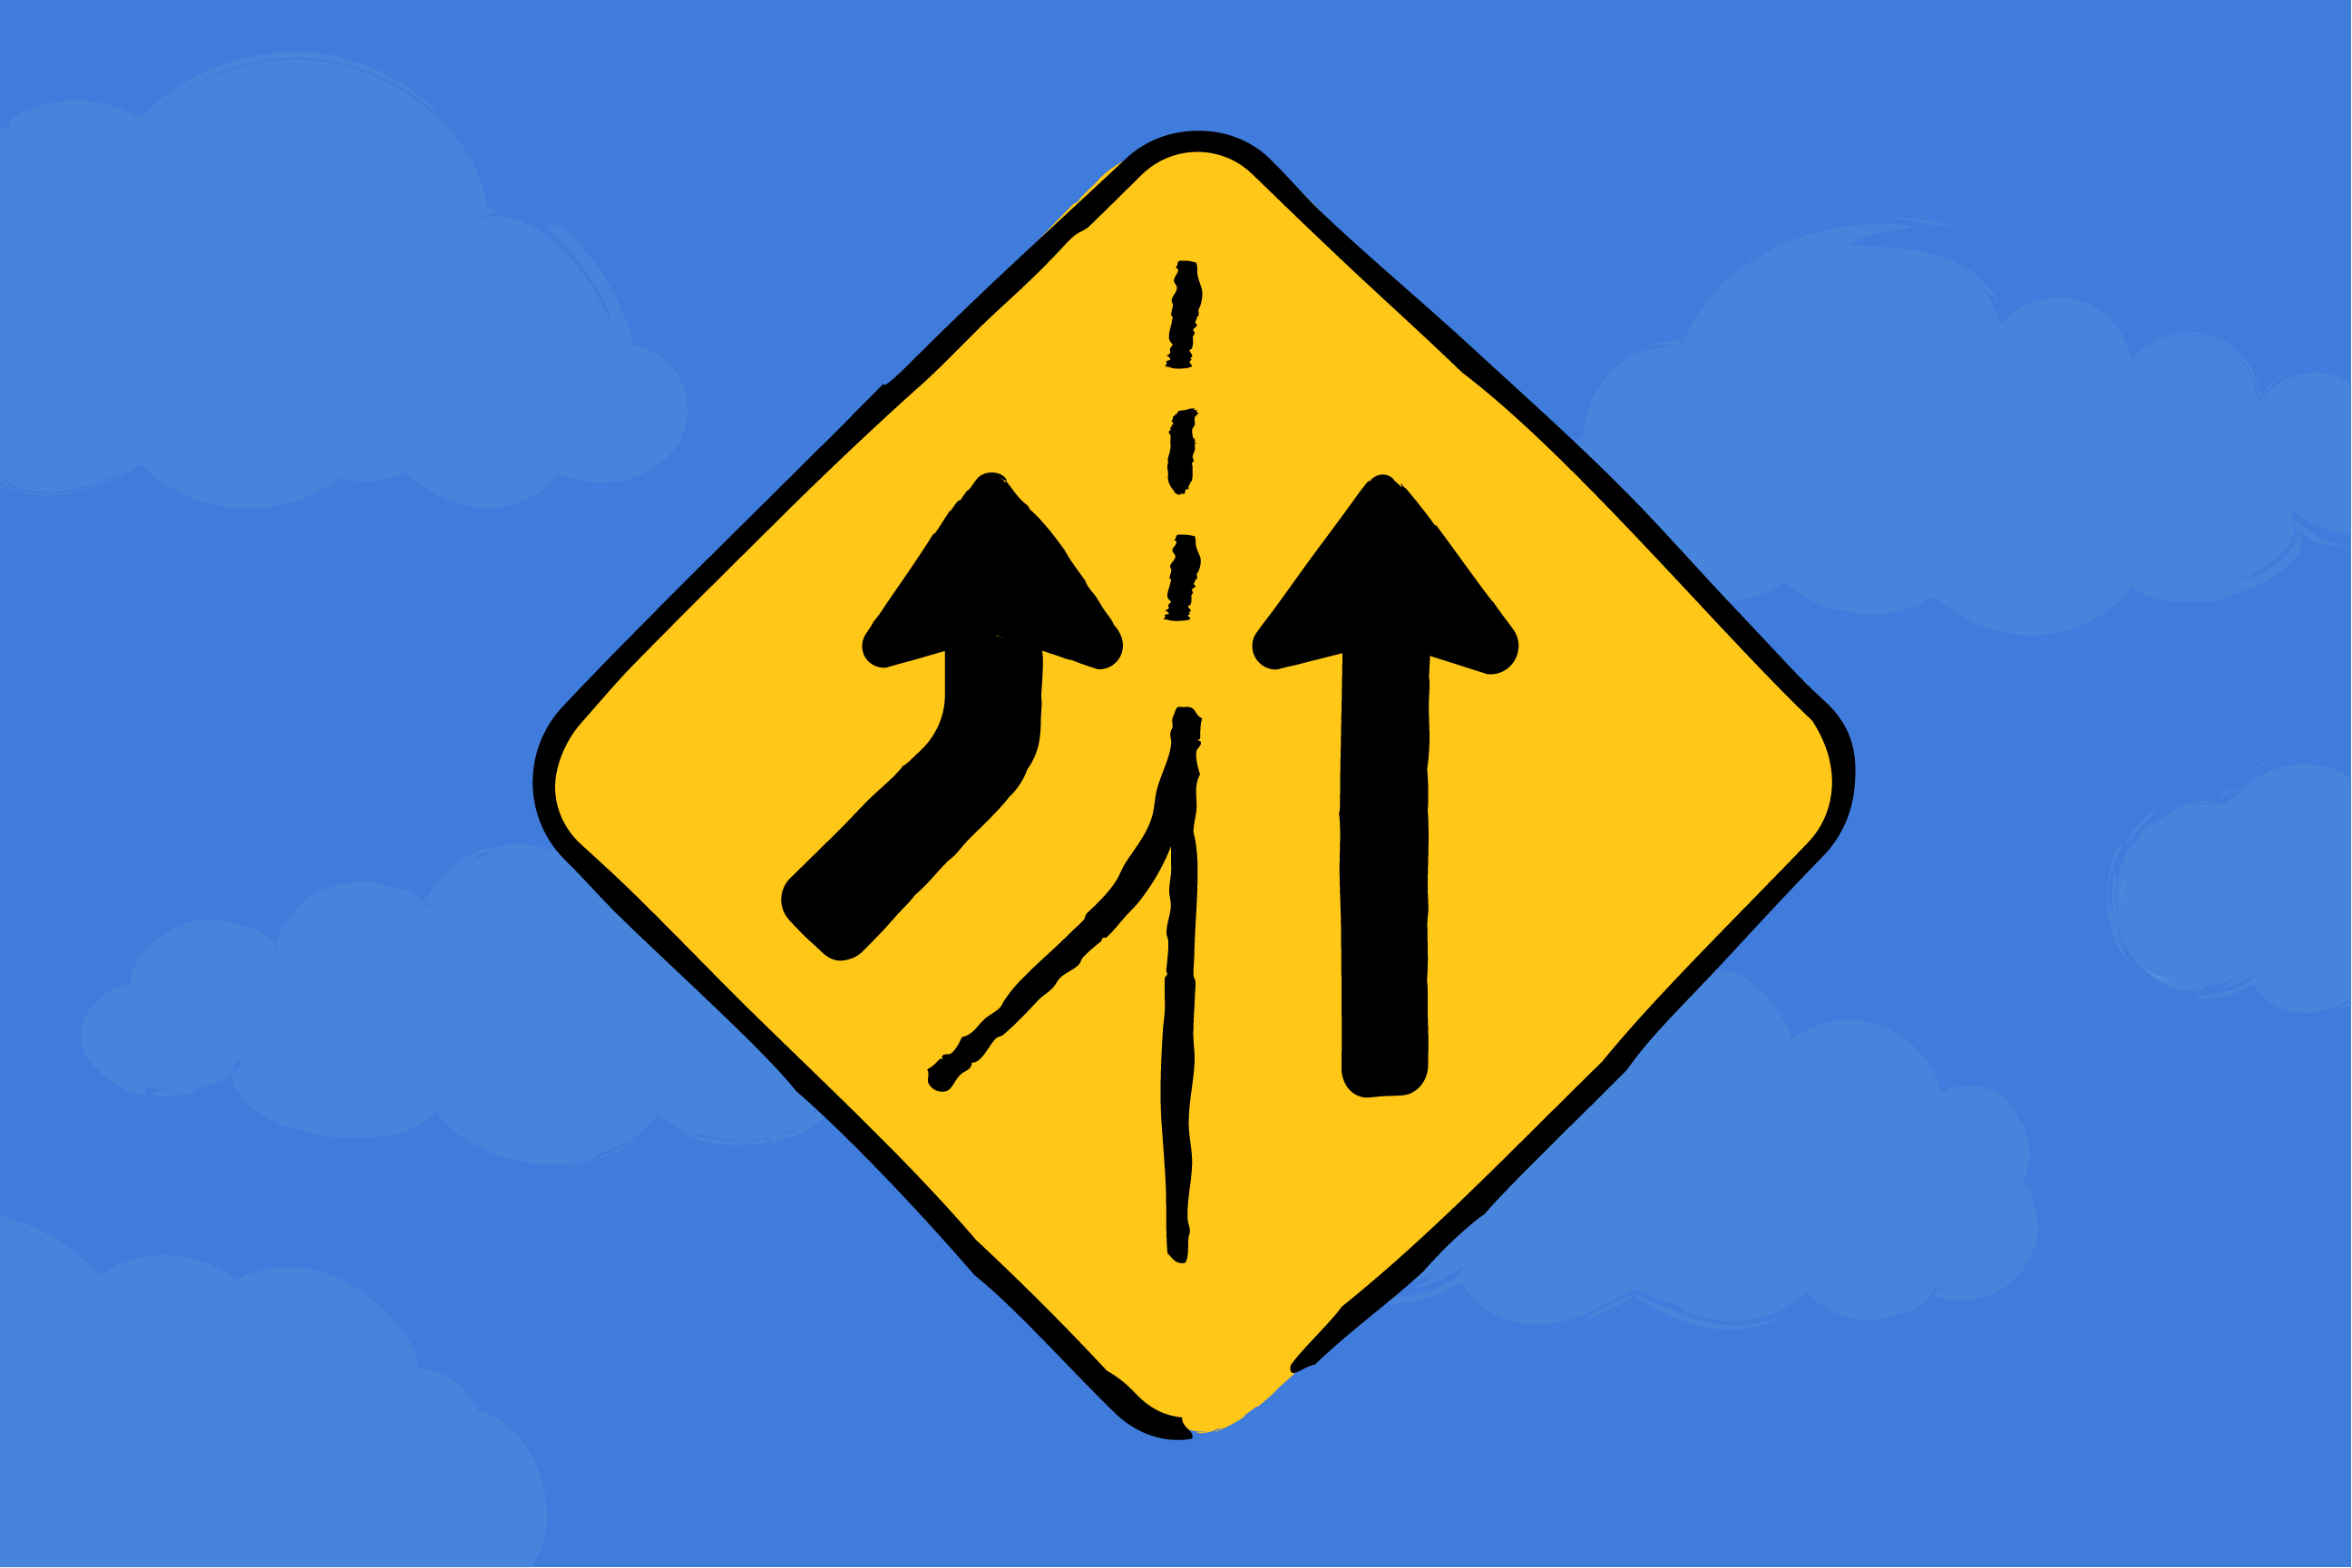 Illustration of a merge traffic sign